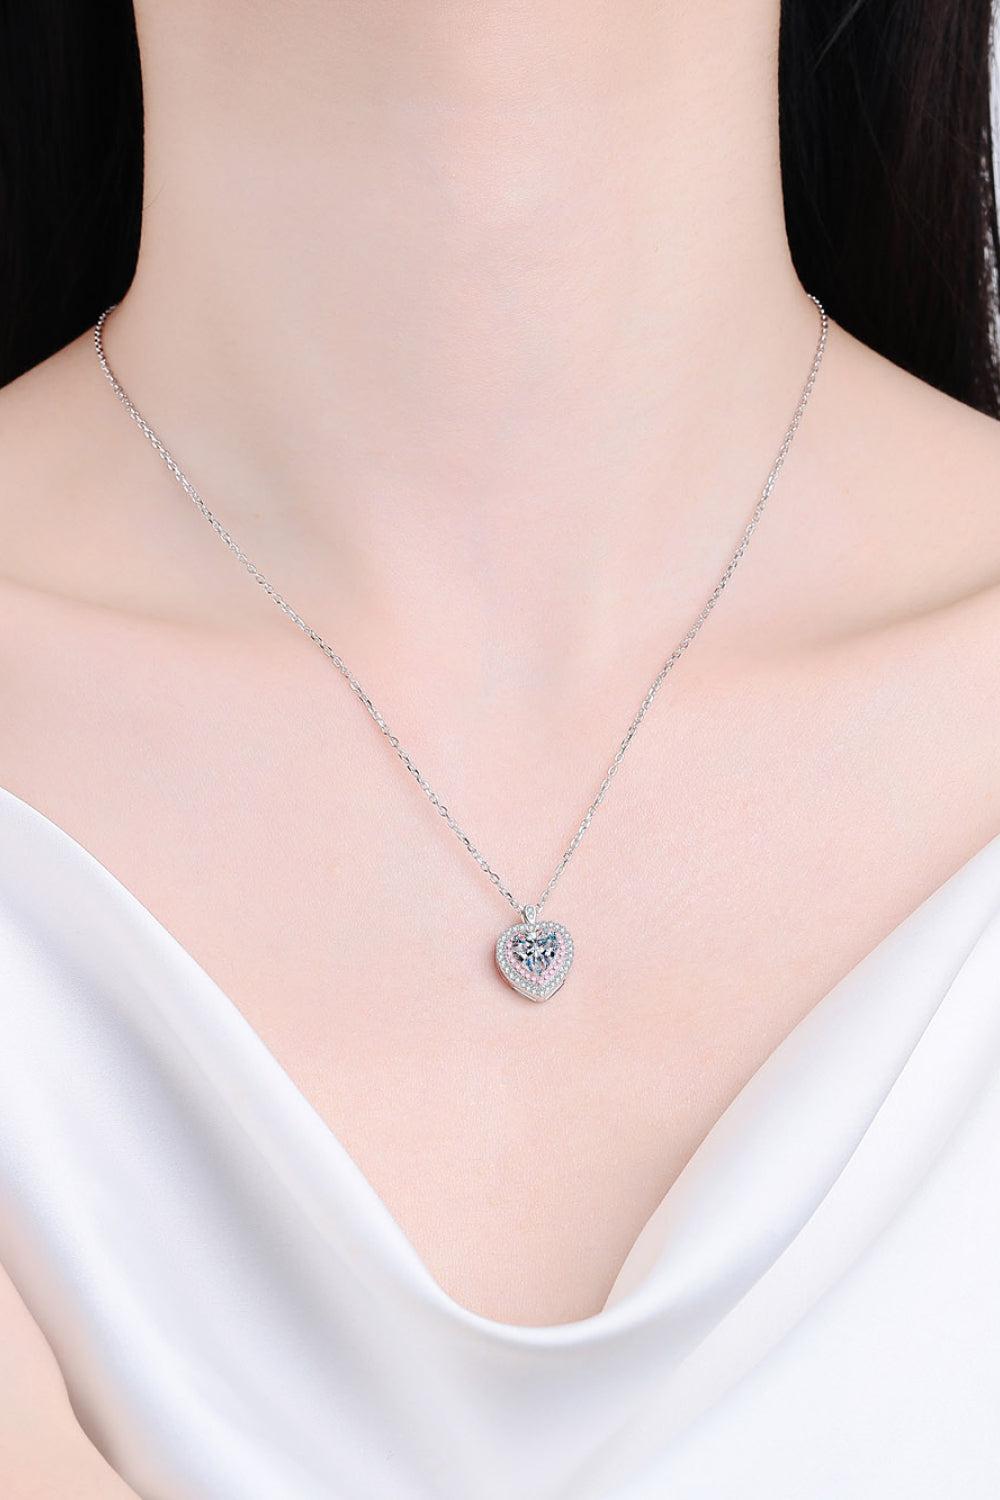 925 Sterling Silver 1 Carat Moissanite Heart Pendant Necklace BLUE ZONE PLANET